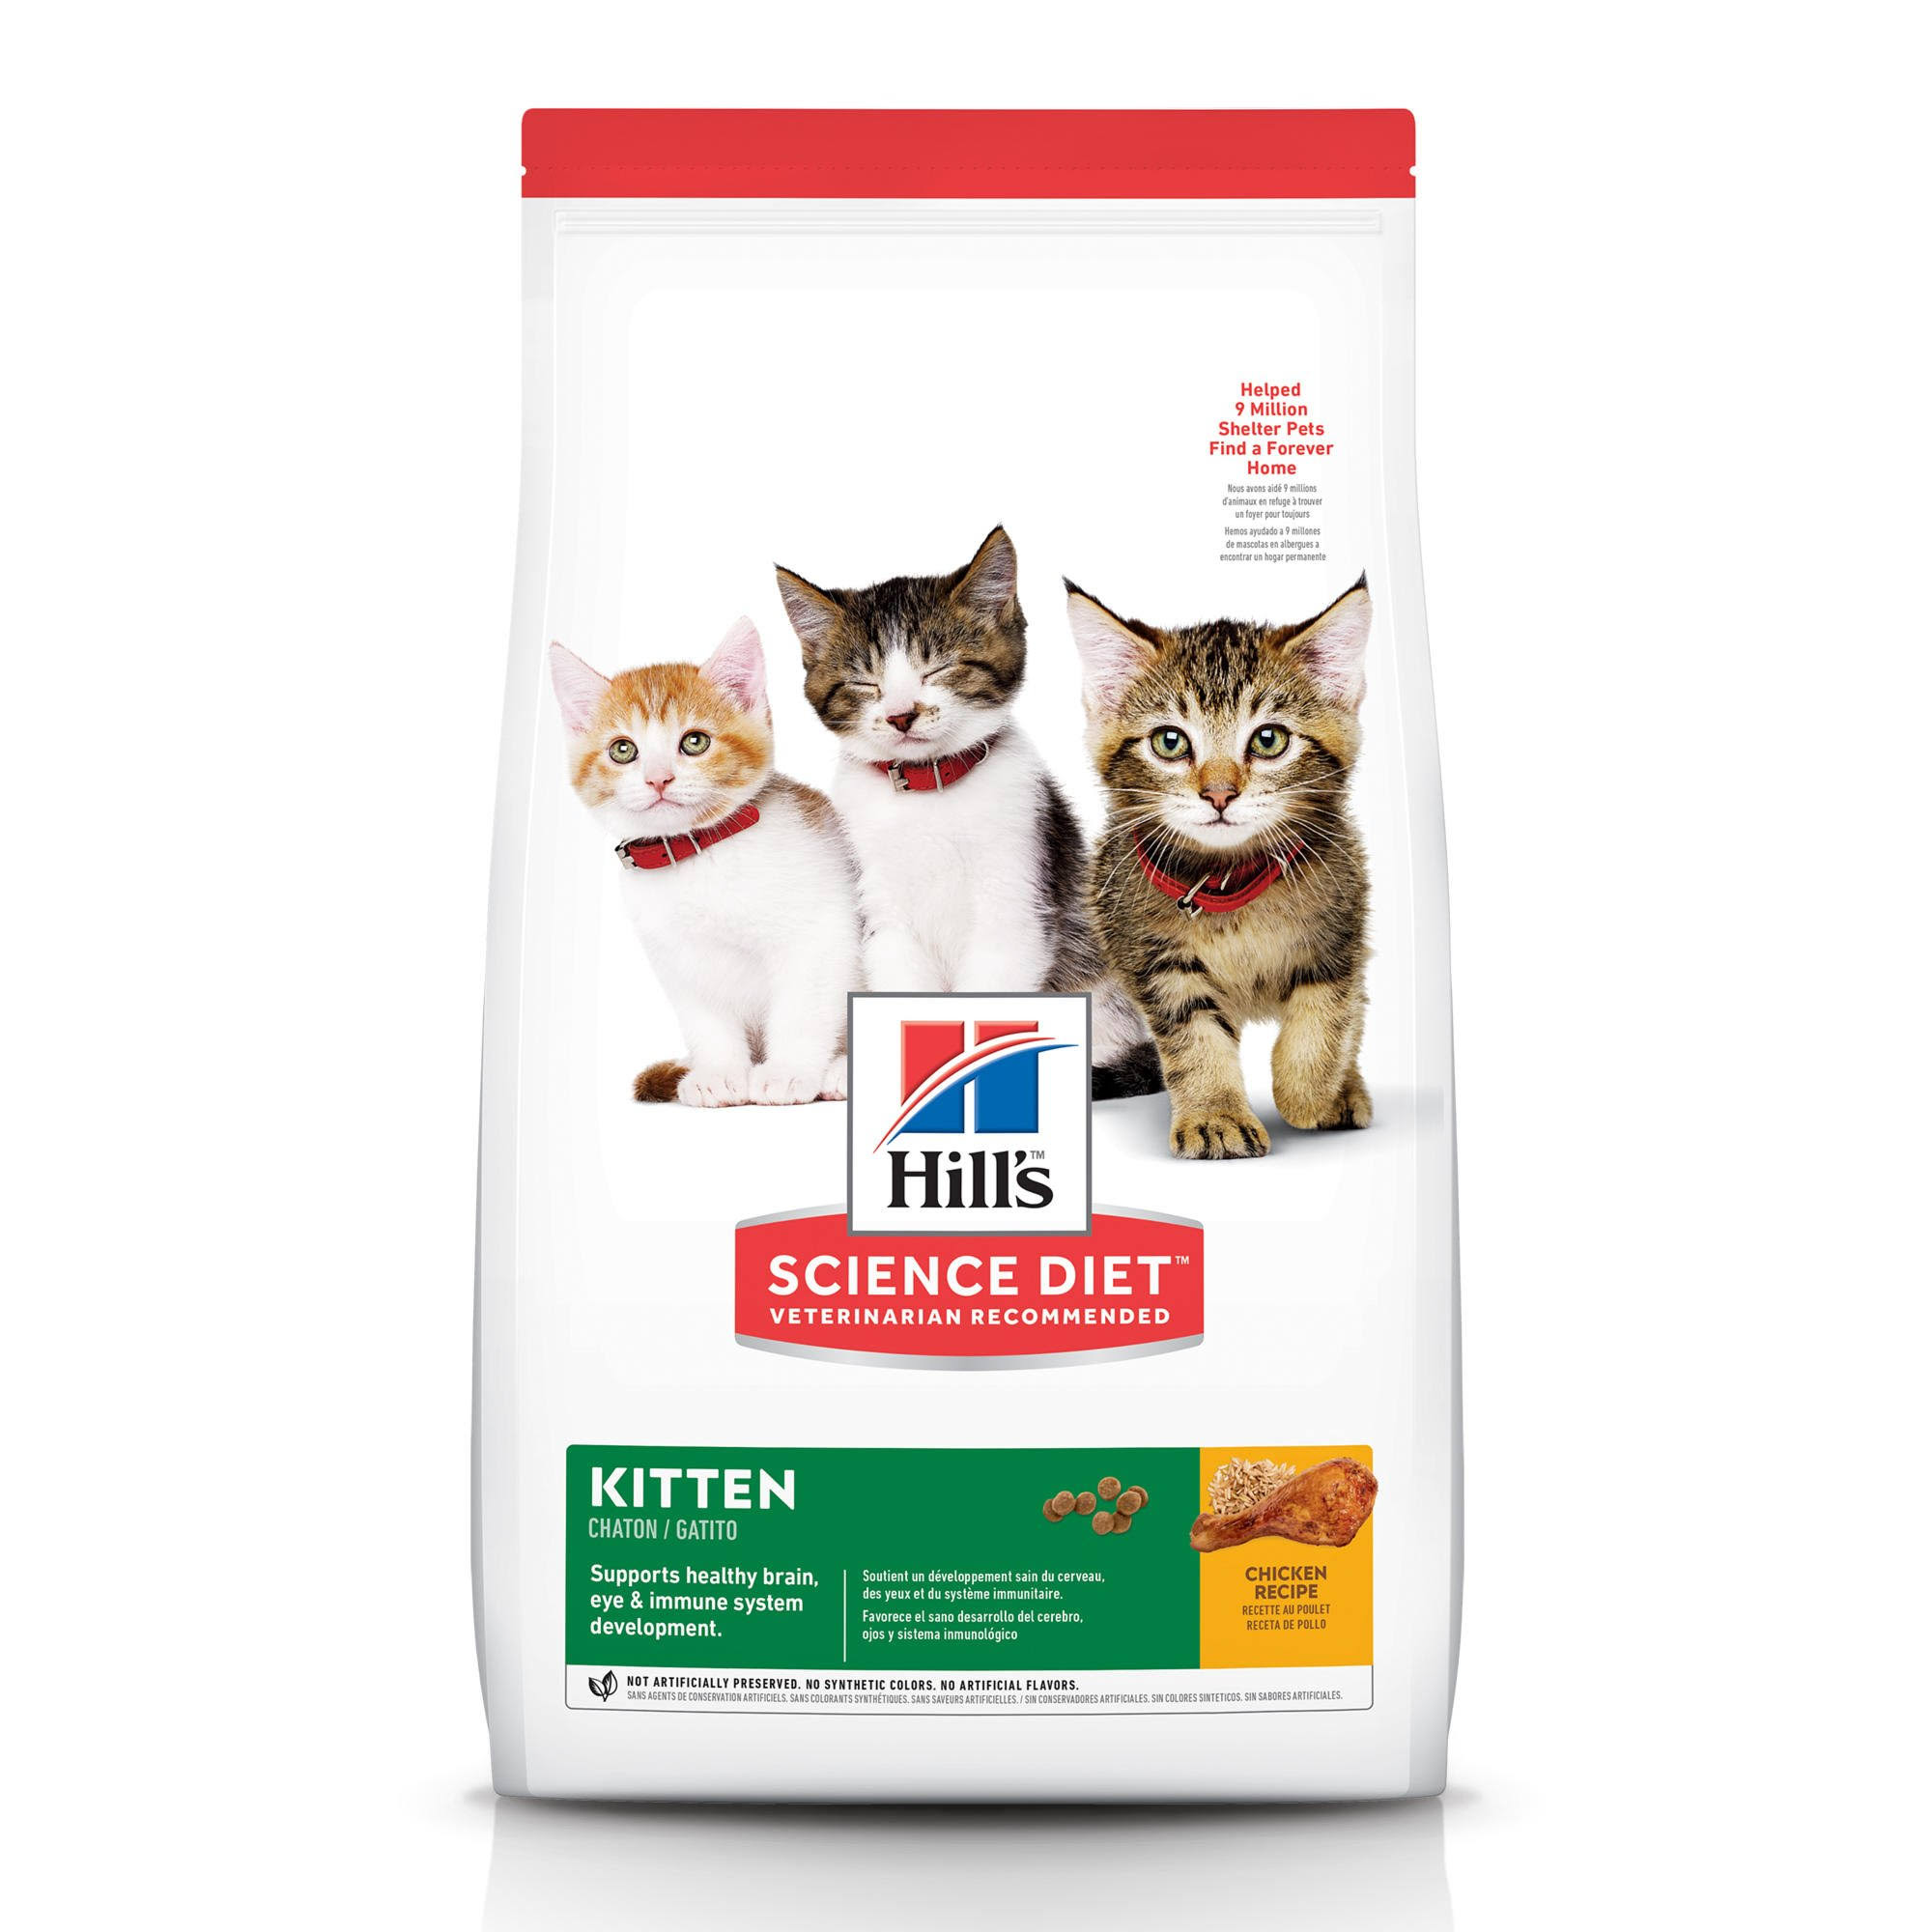 Hill's Science Diet Healthy Development Premium Natural Dry Cat Food - Chicken Recipe, 7lbs